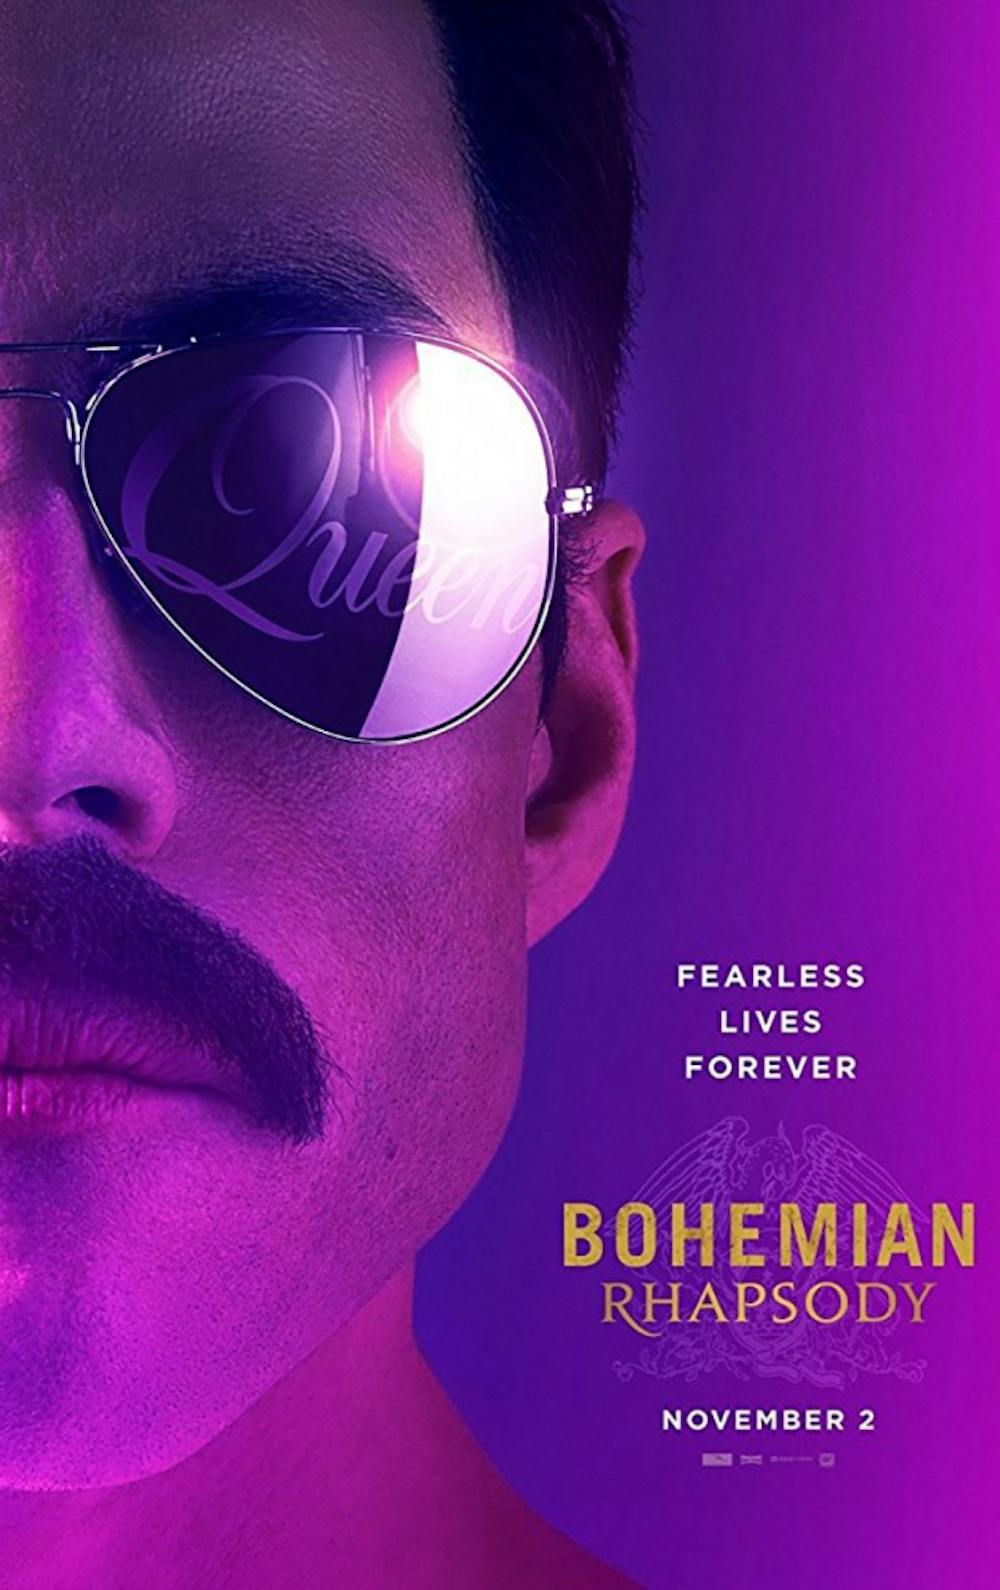 The movie “Bohemian Rhapsody” will be released Nov. 2, 2018.